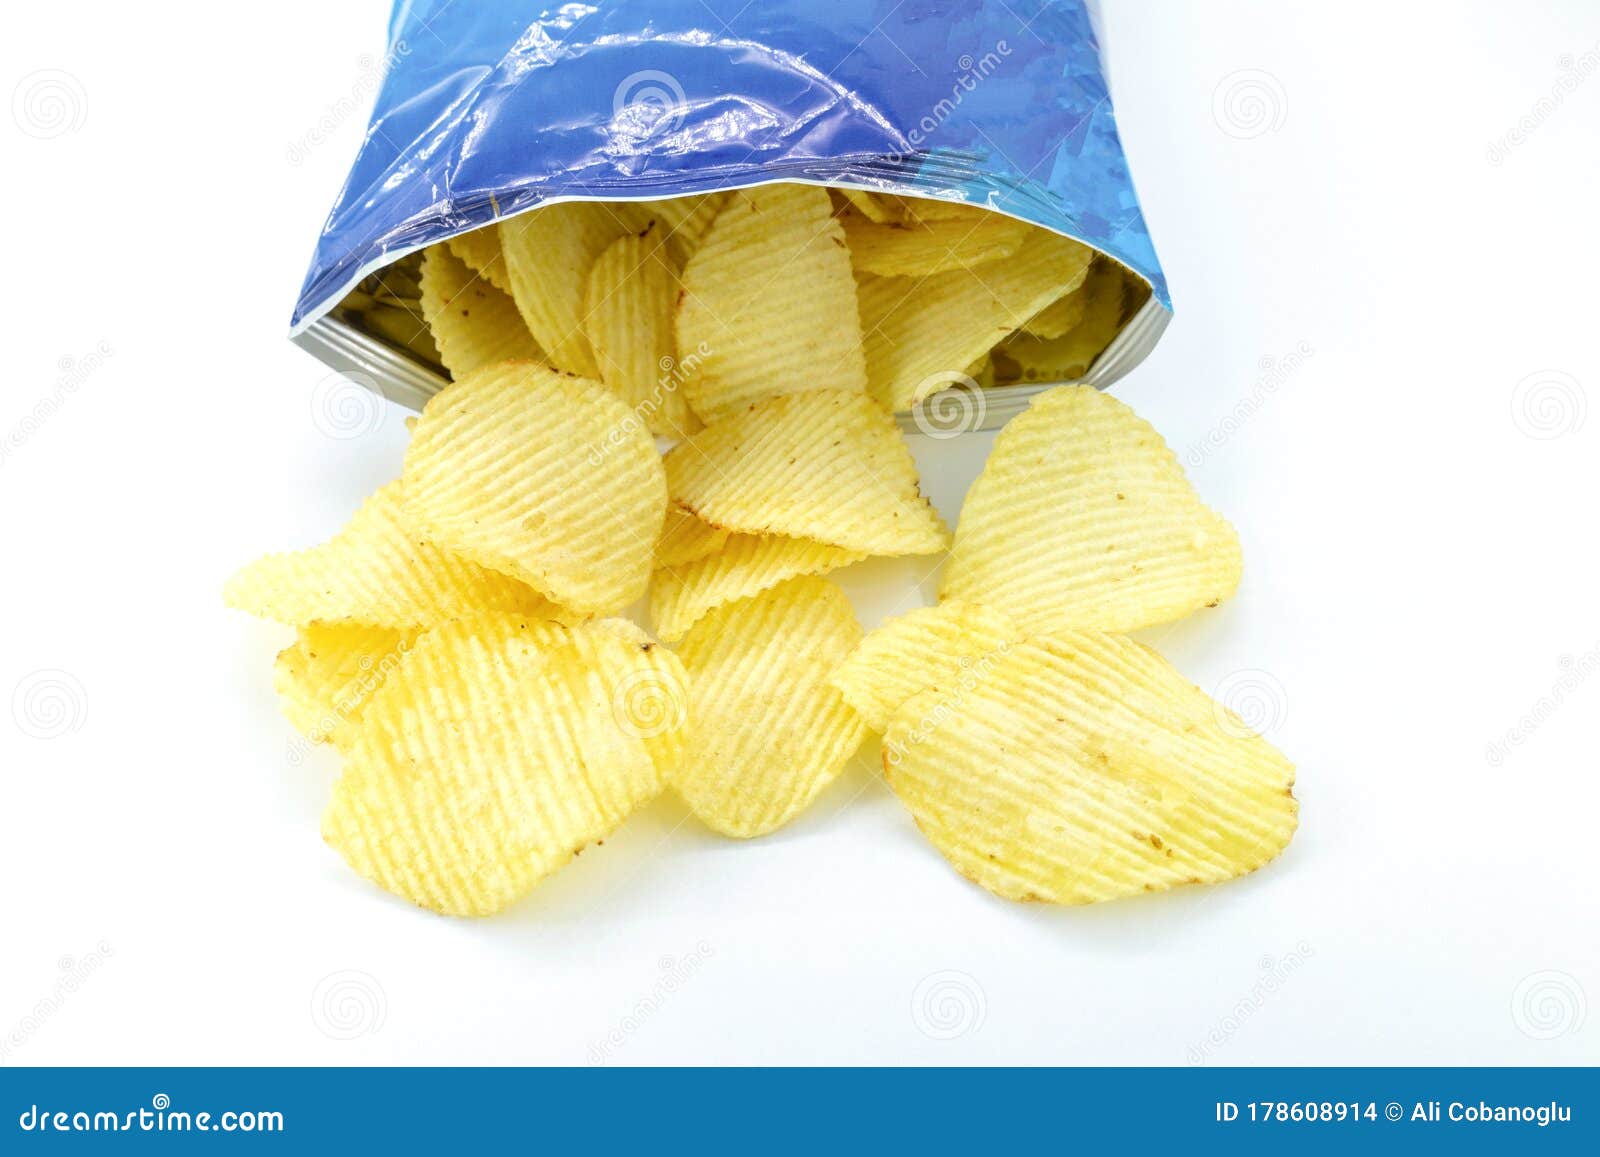 bag of potato chips on white background